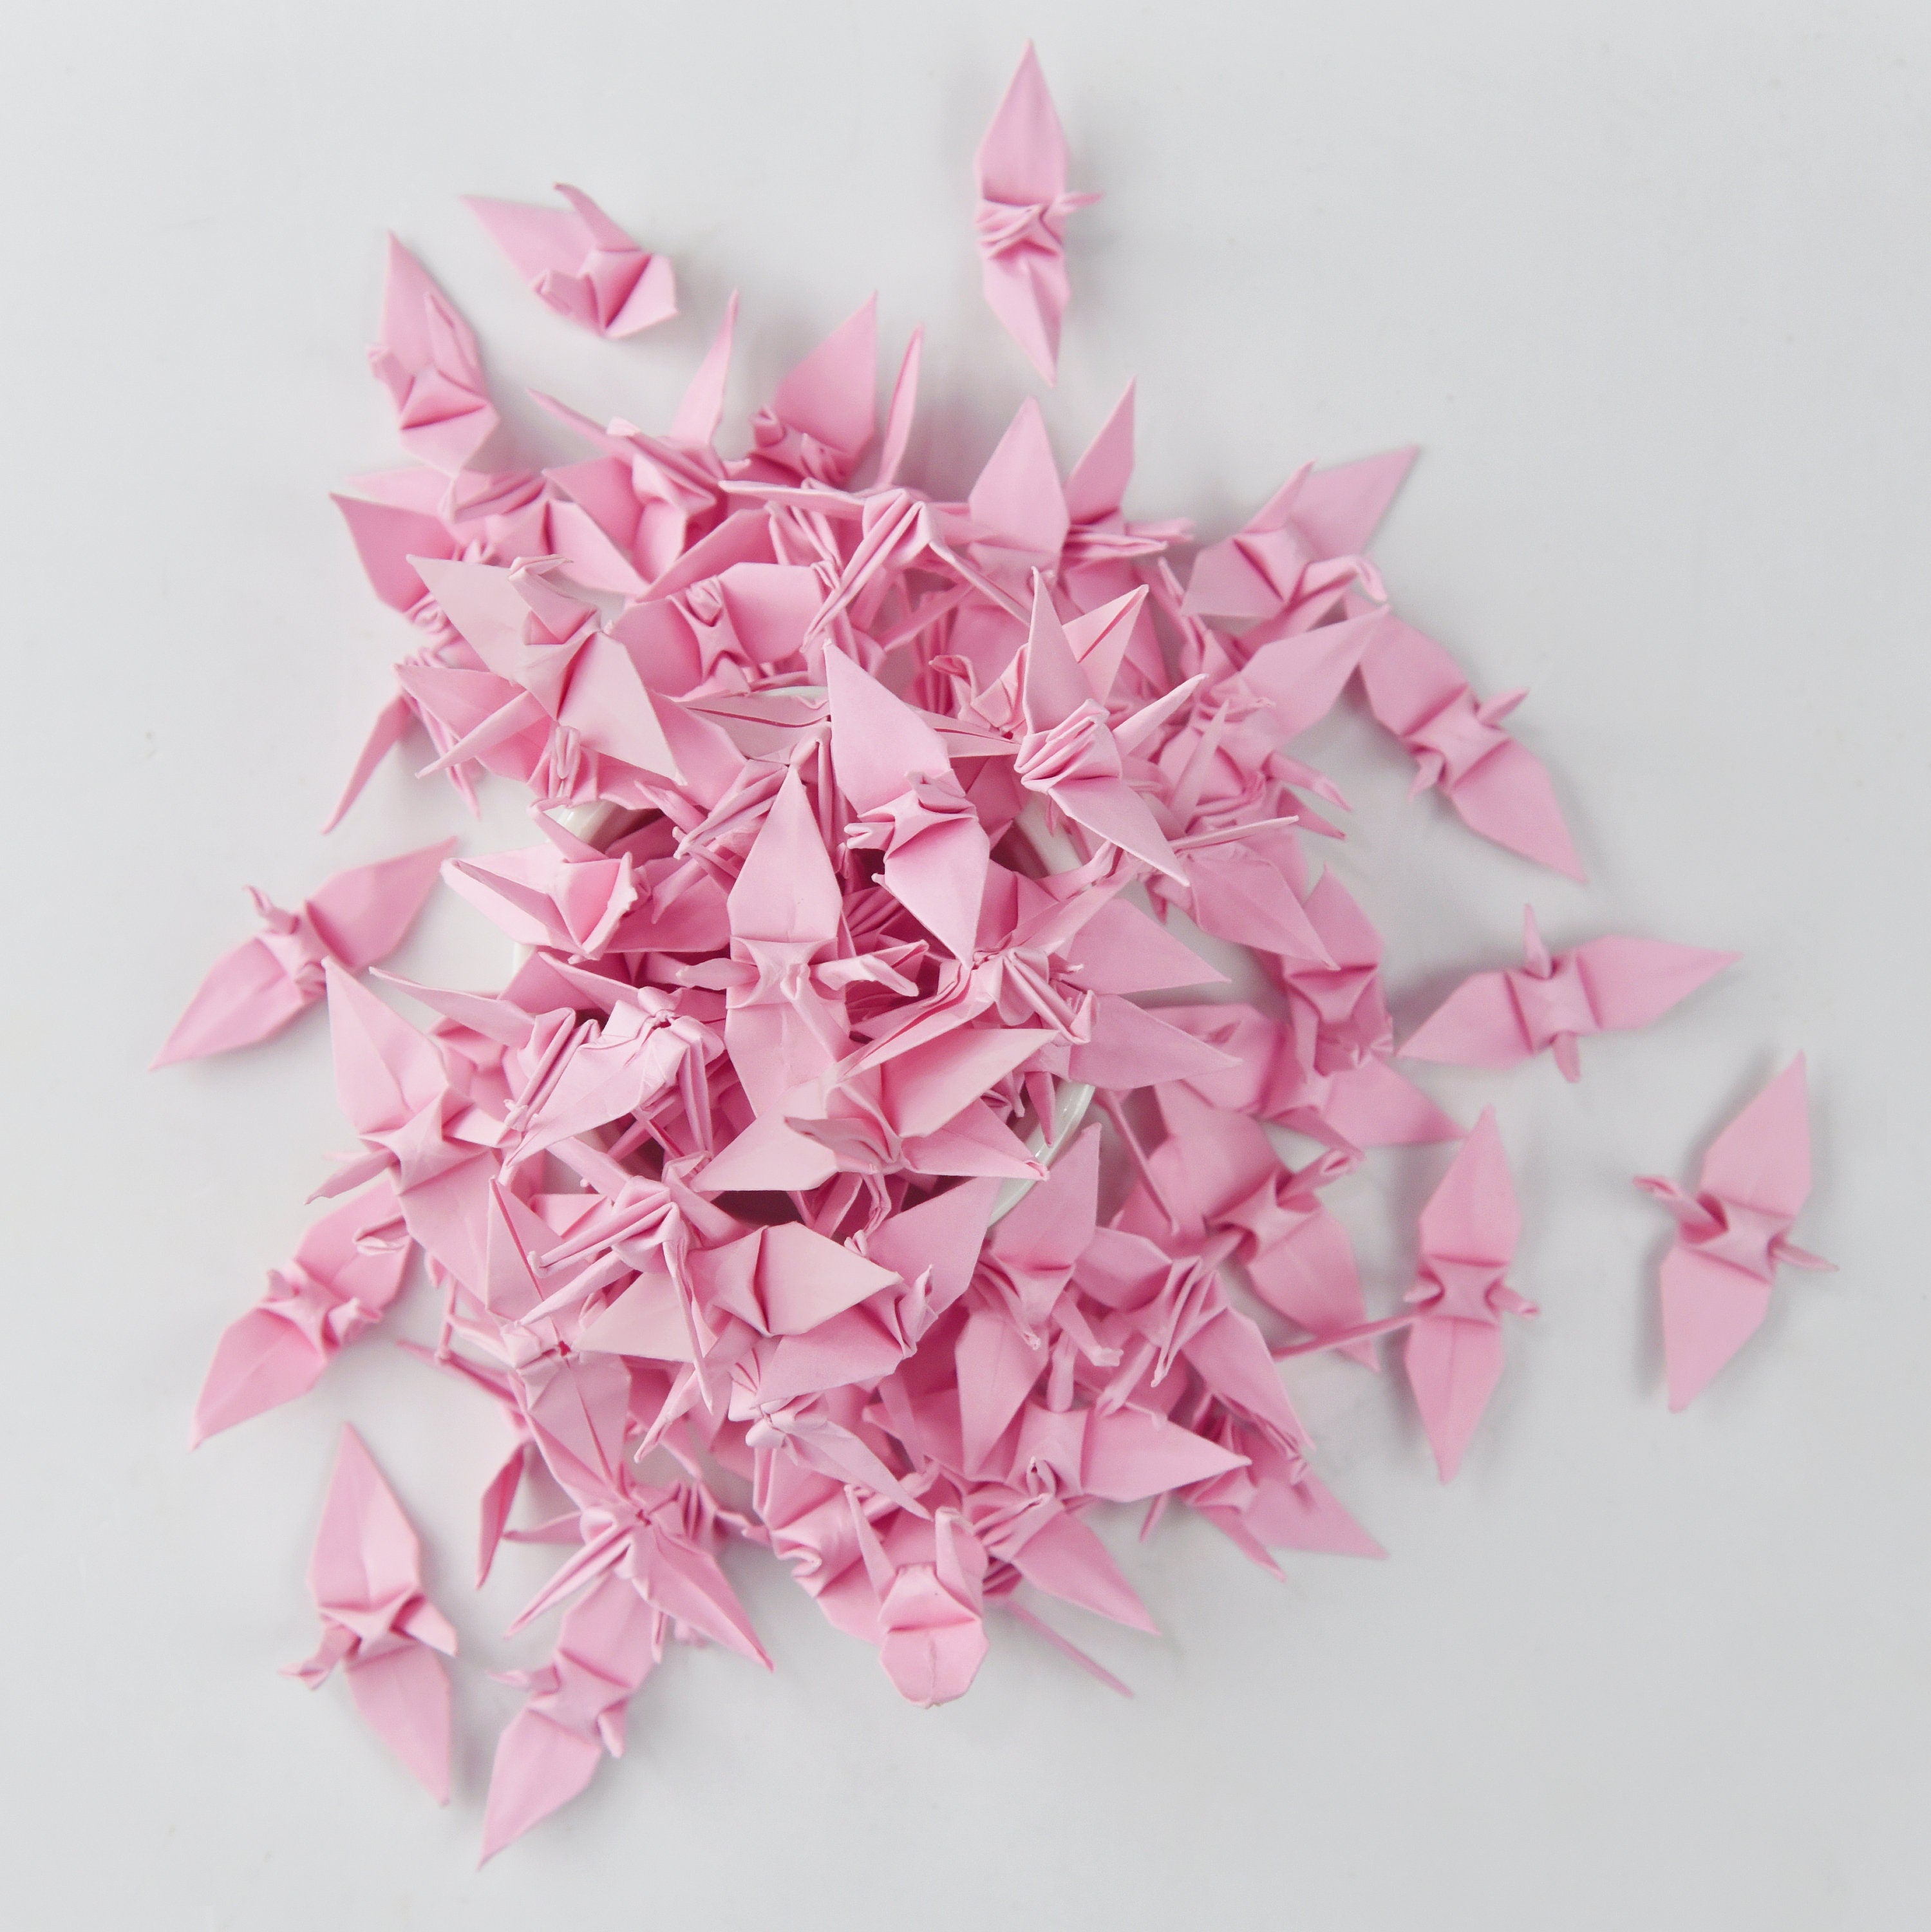 100 gru di carta origami gru origami rosa prefabbricate piccole 1,5x1,5 pollici per decorazioni di nozze, regali di anniversario, San Valentino